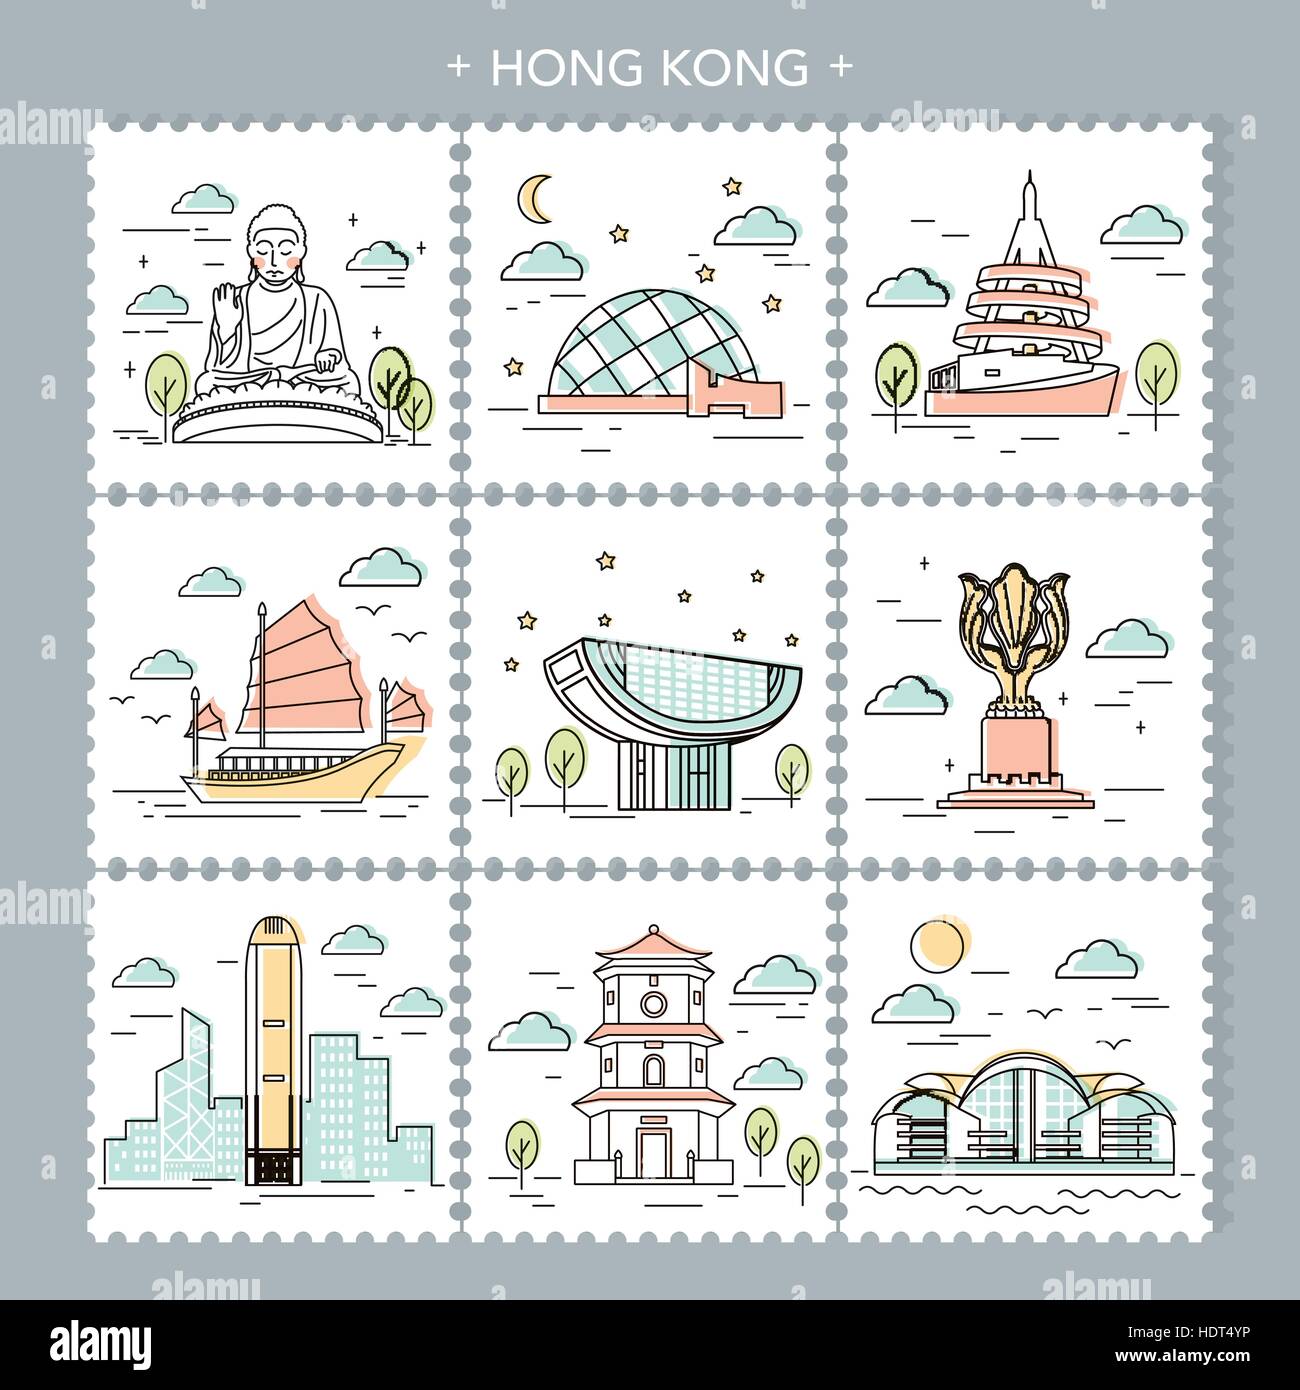 creative Hong Kong travel attractions stamp design Stock Vector